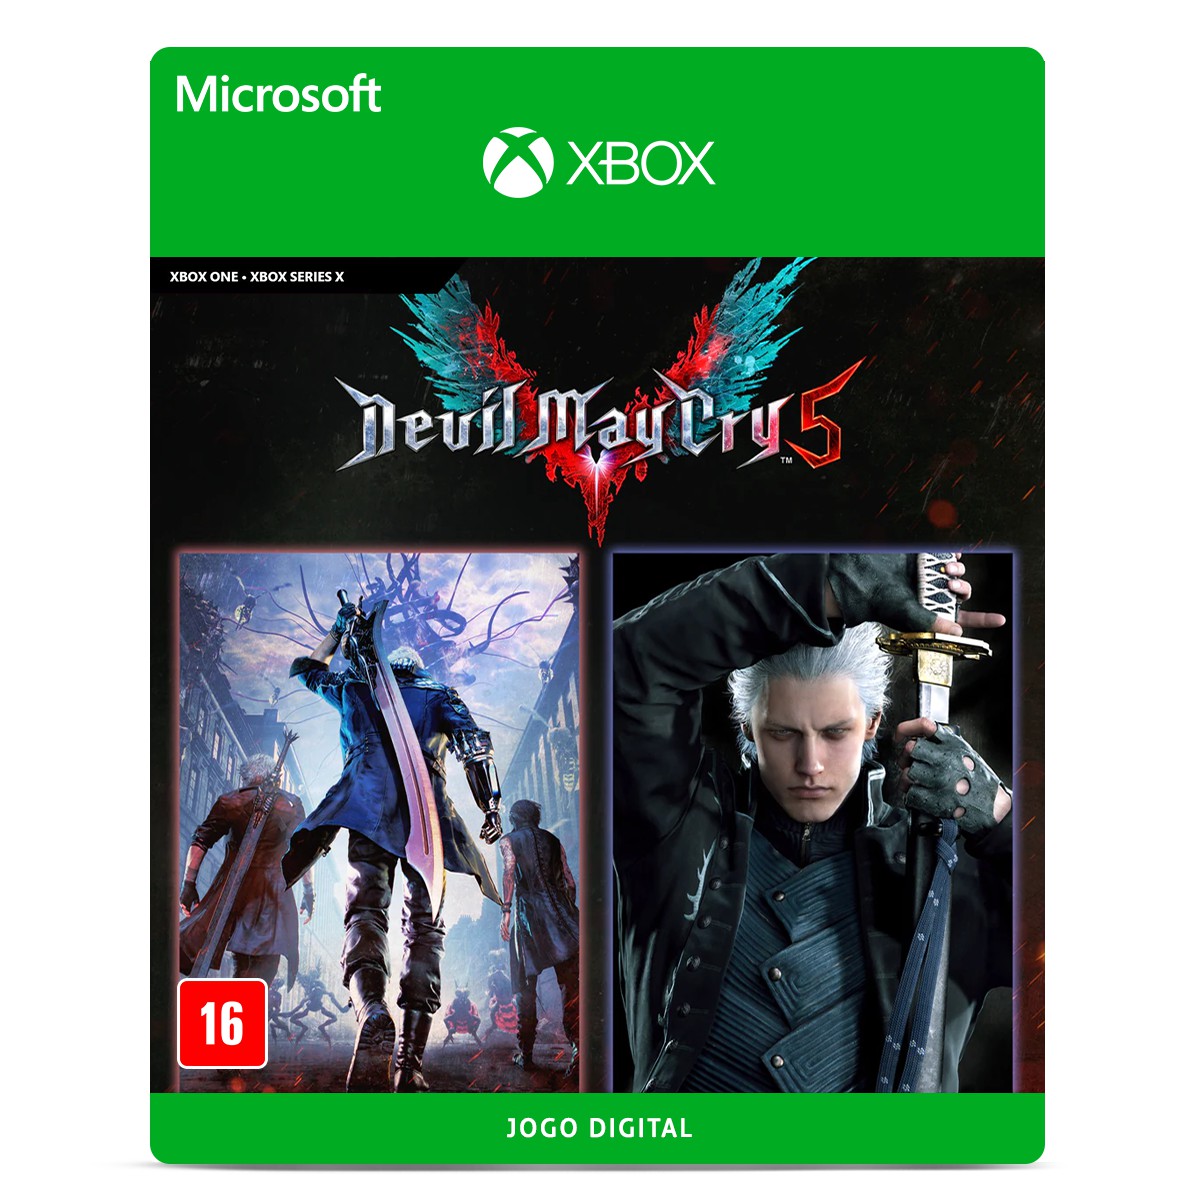 Devil May Cry 3 - Special Edition - PC Código Digital - PentaKill Store -  Gift Card e Games